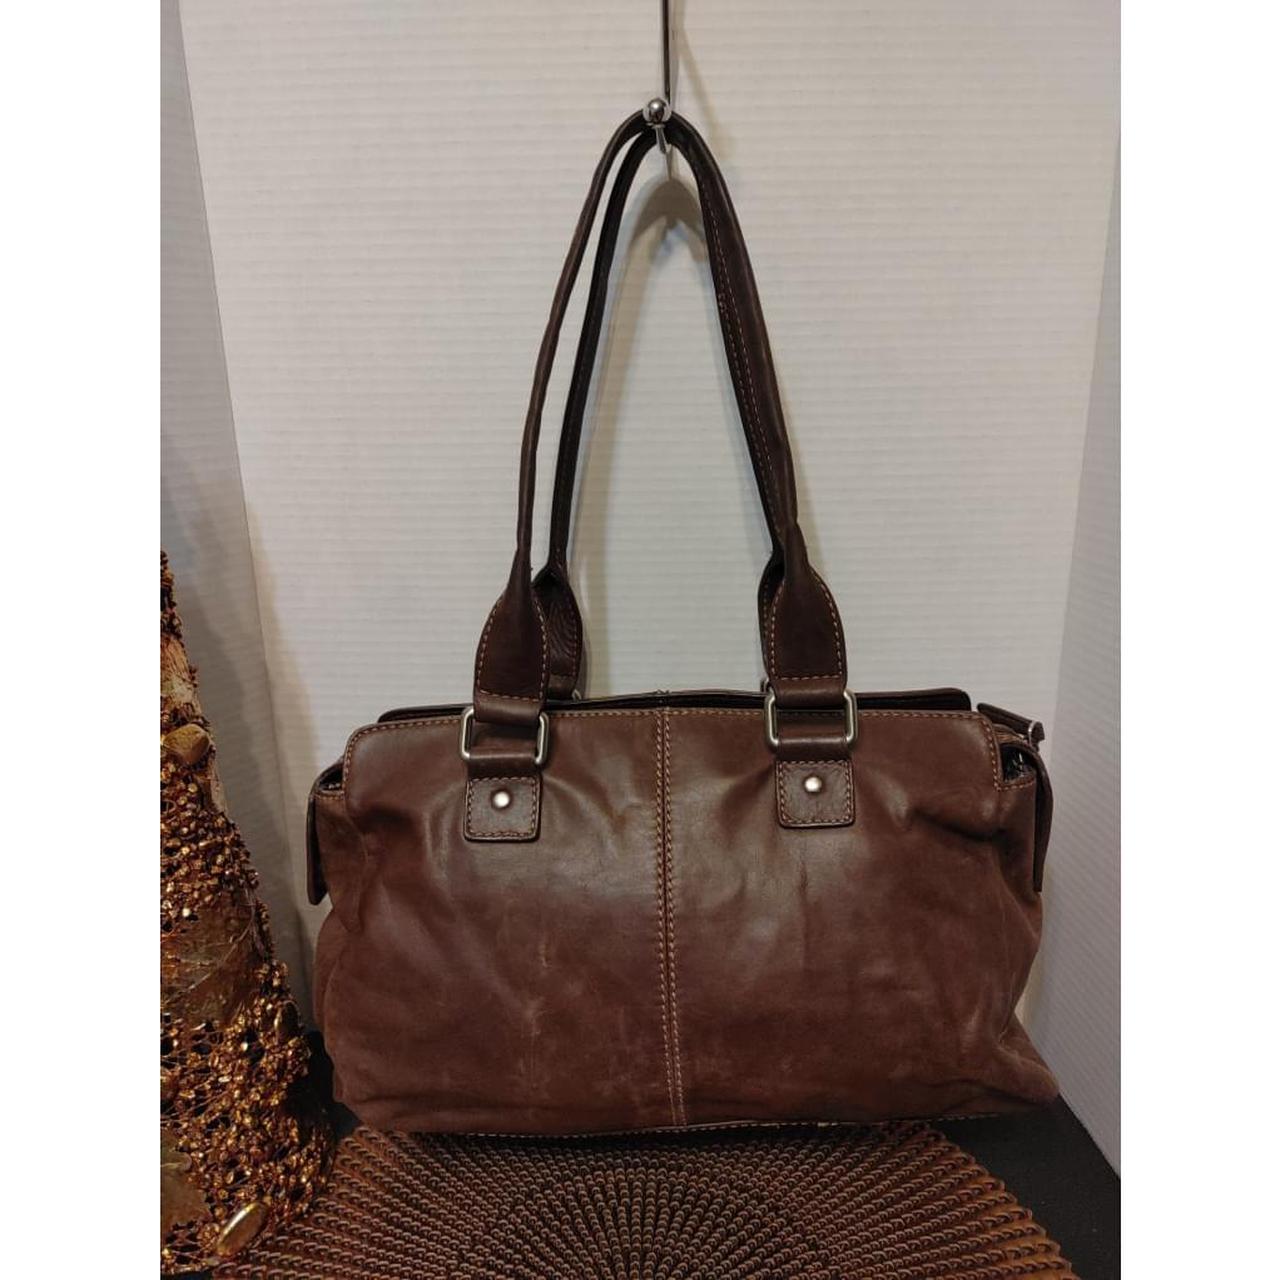 Franco Sarto Black Leather Small Crossbody Shoulder Bag handbag purse. EUC.  | eBay